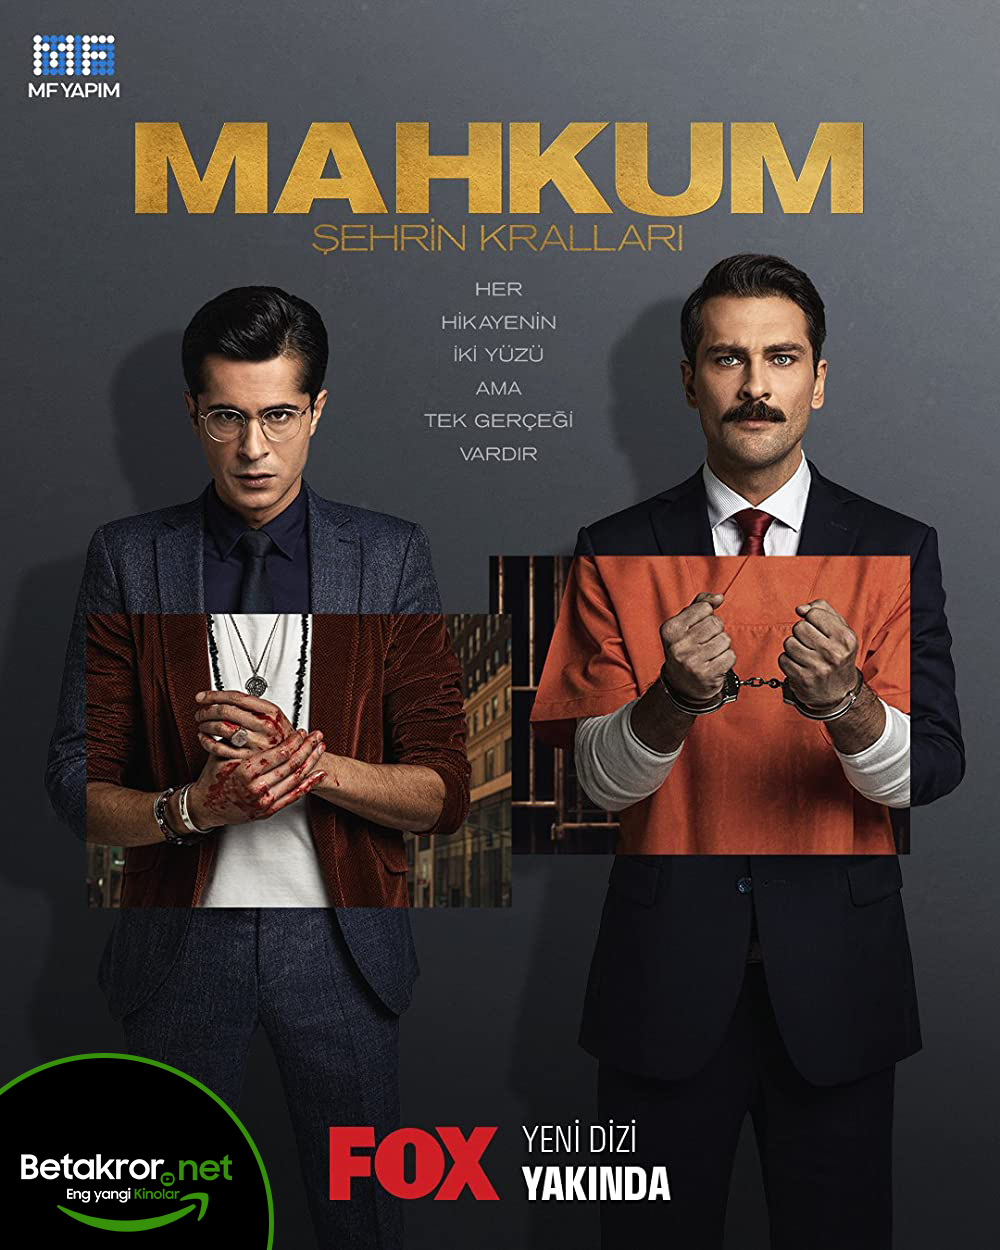 Maxkum / Mahkum turk serial 1-51, 52, 53, 54, 55, 56, 57, 58, 59, 60, 61-qism (o'zbek tilida)